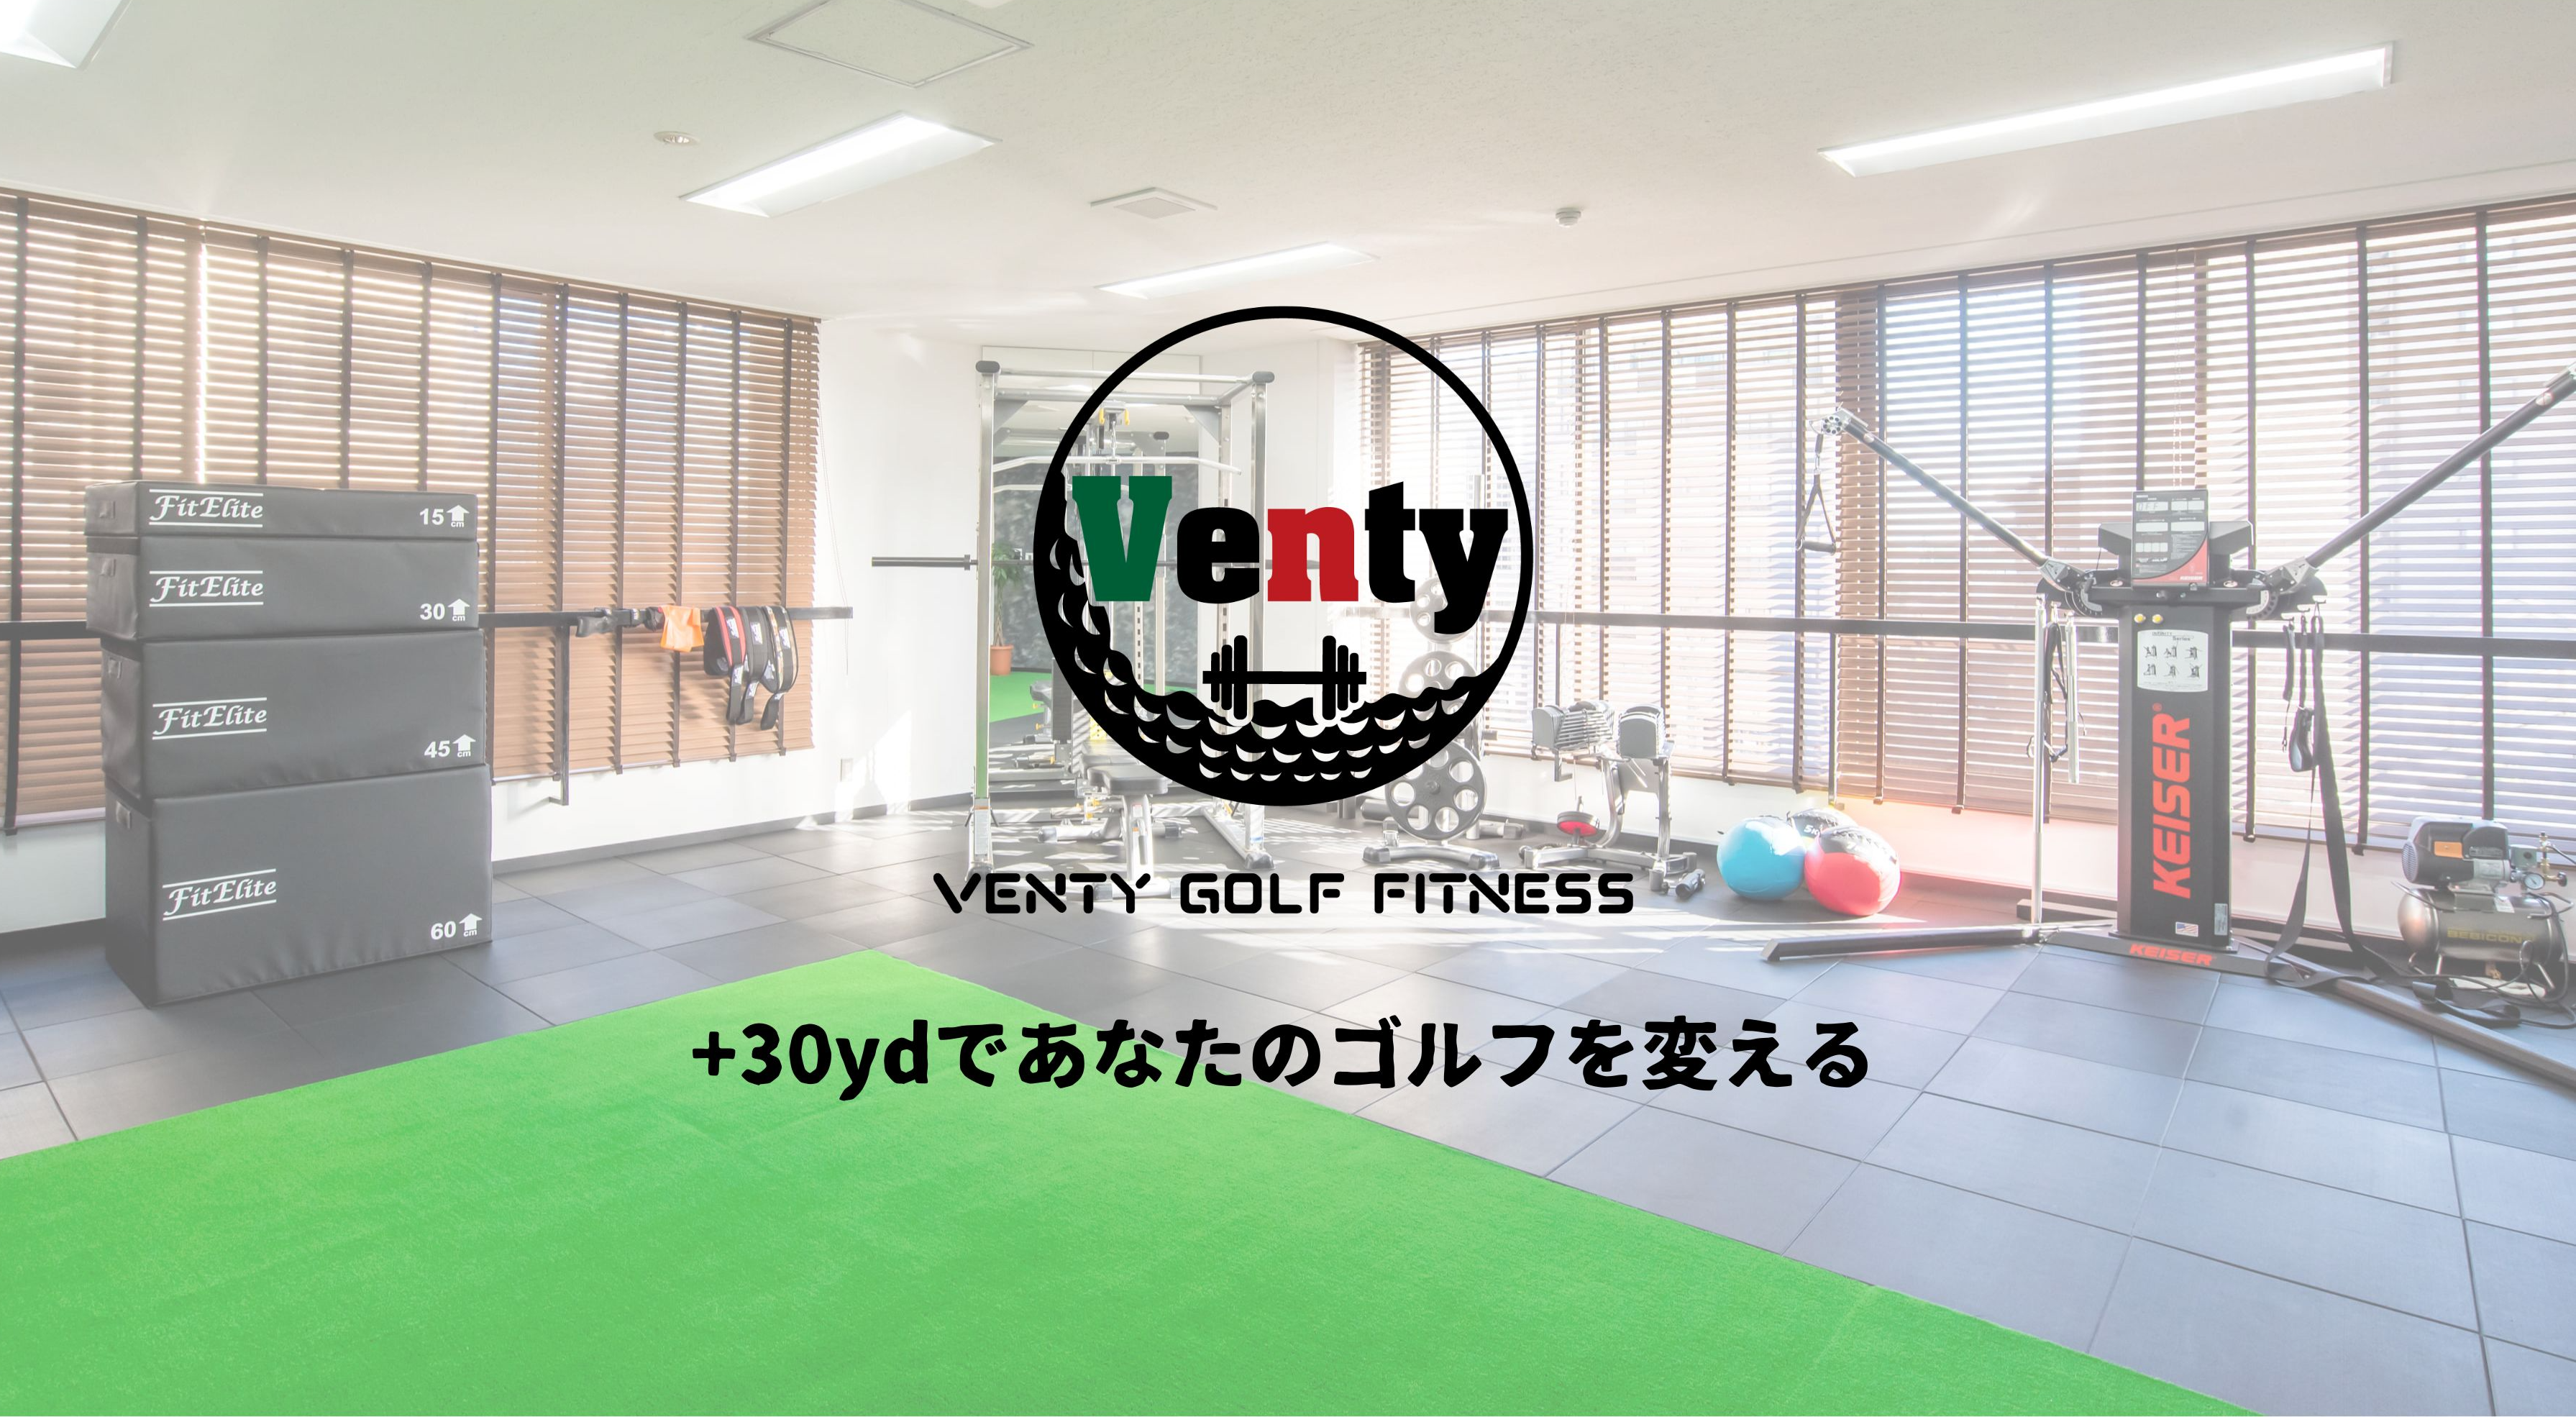 Venty Golf Fitness